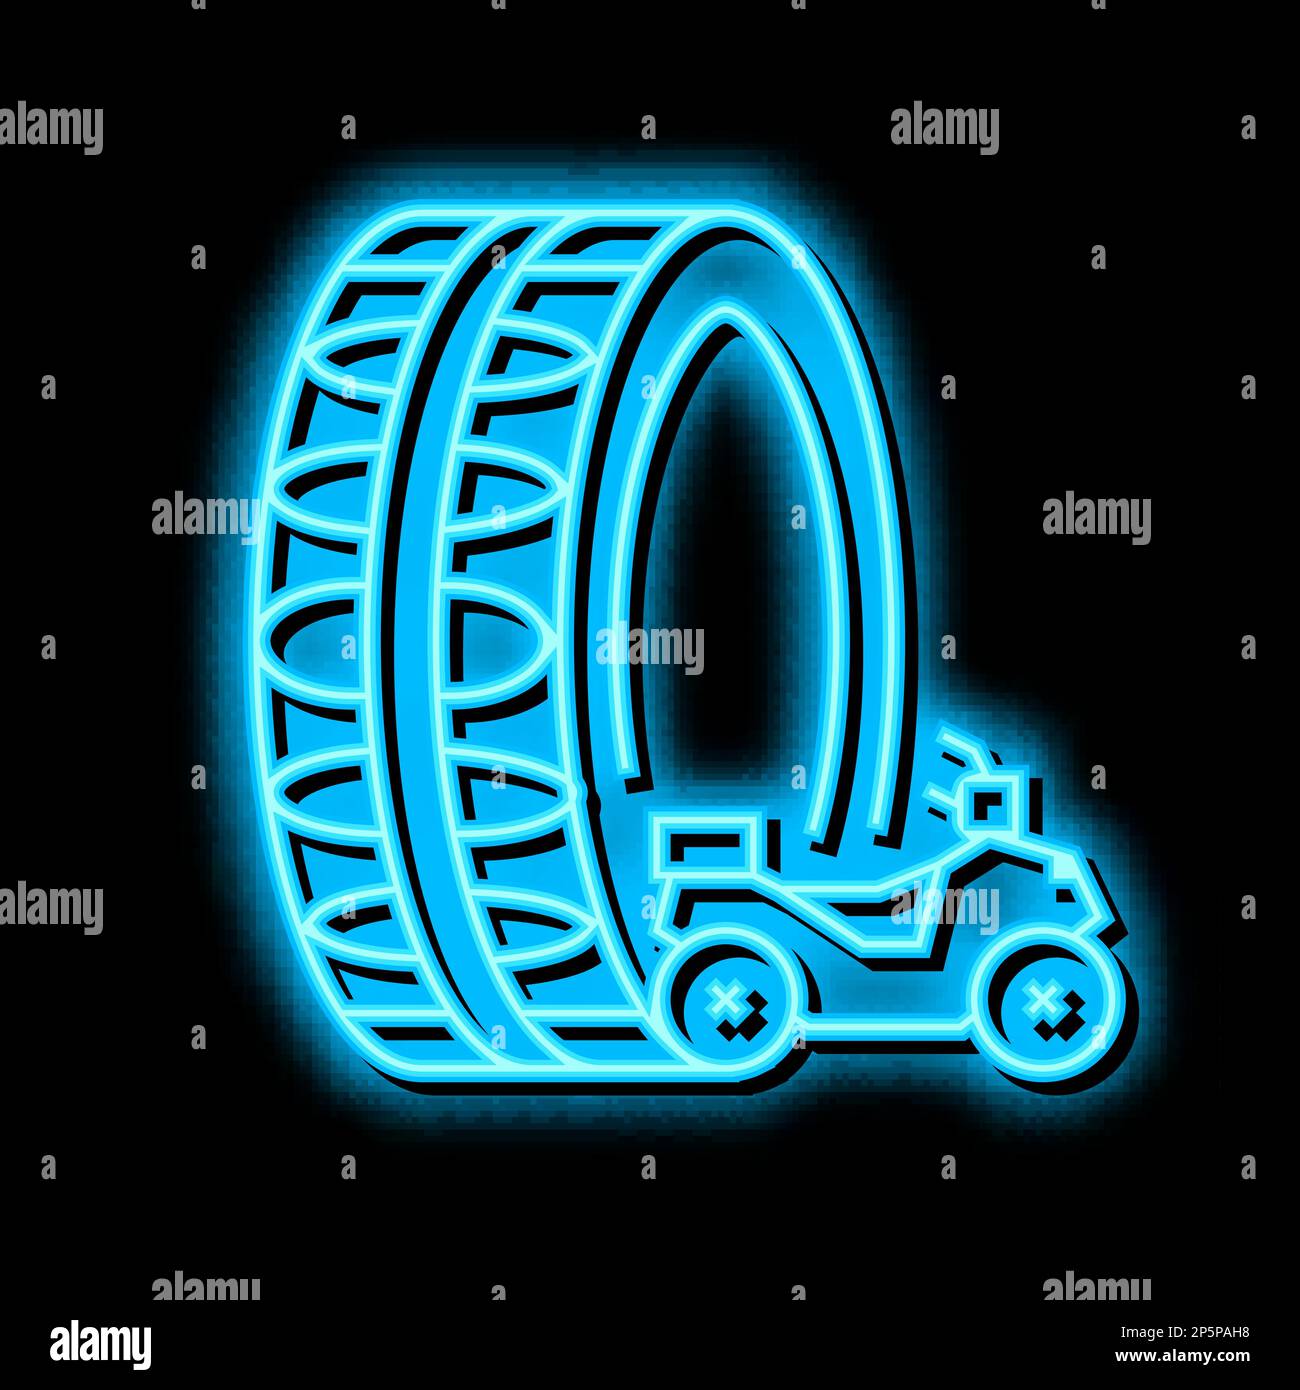 atv utv tires neon glow icon illustration Stock Vector